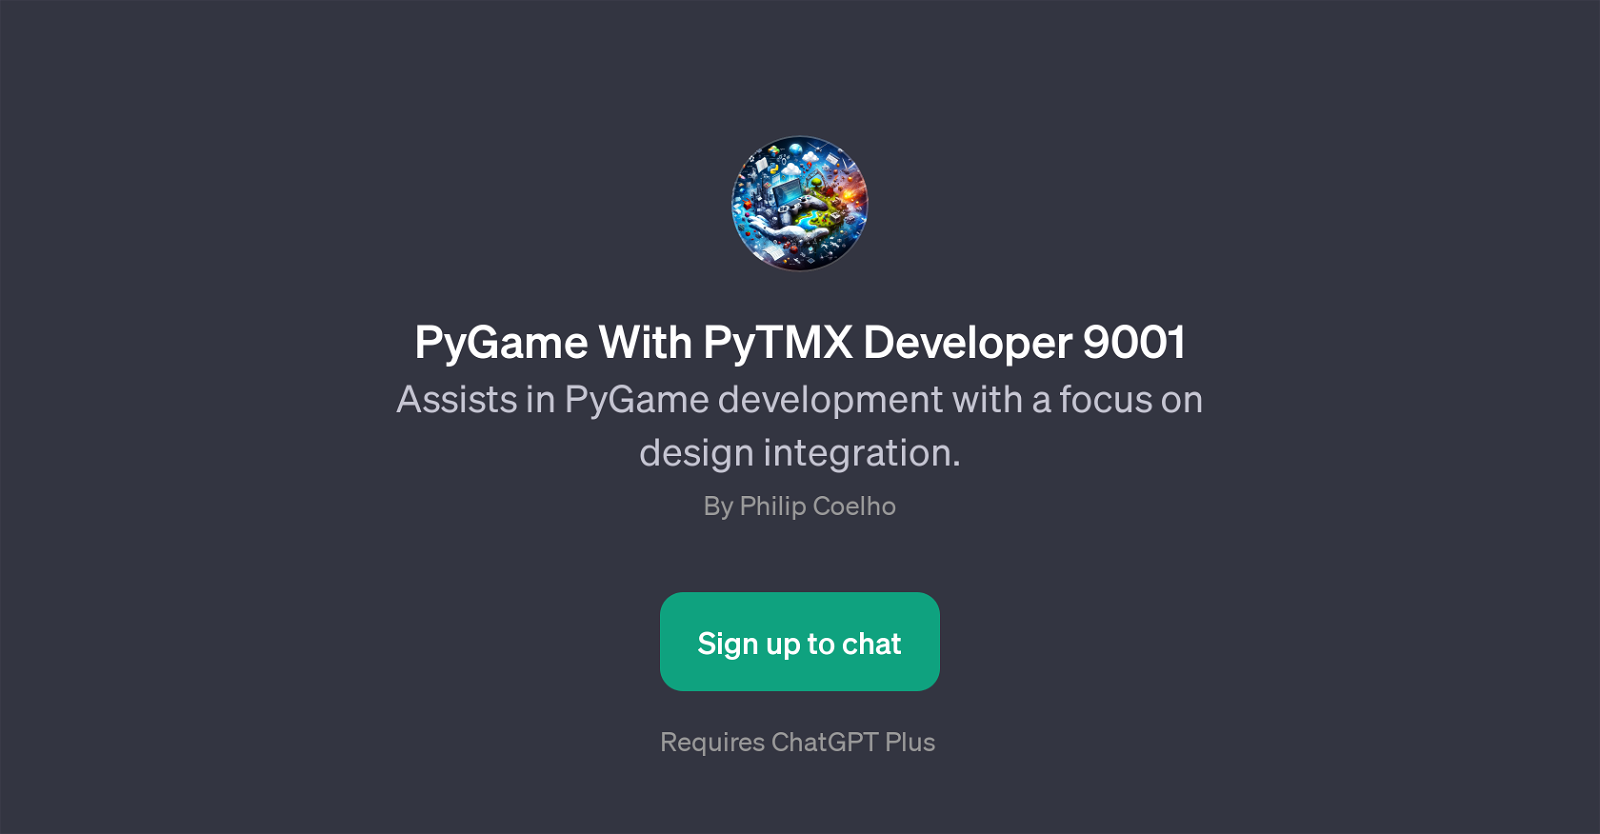 PyGame With PyTMX Developer 9001 website